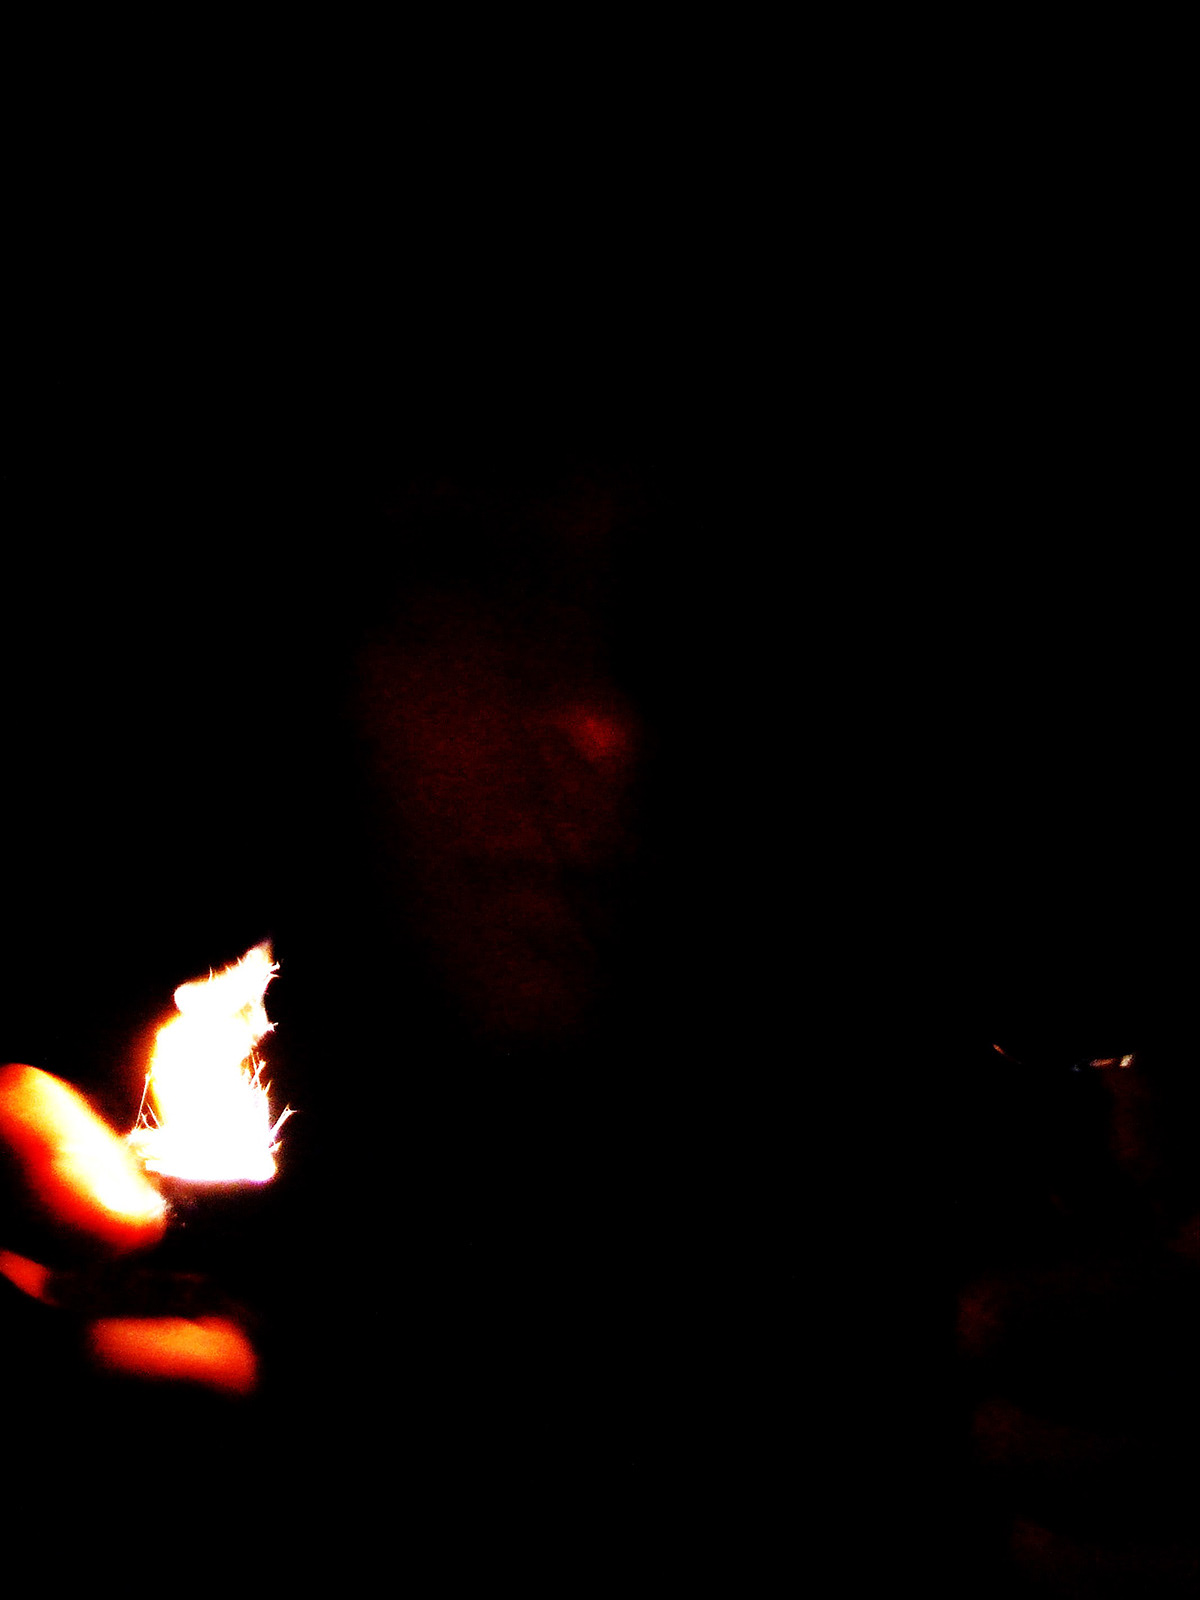 hidden identity darkness dark black light glow warmth question figure portrait stereotype experimental photography experimental concept